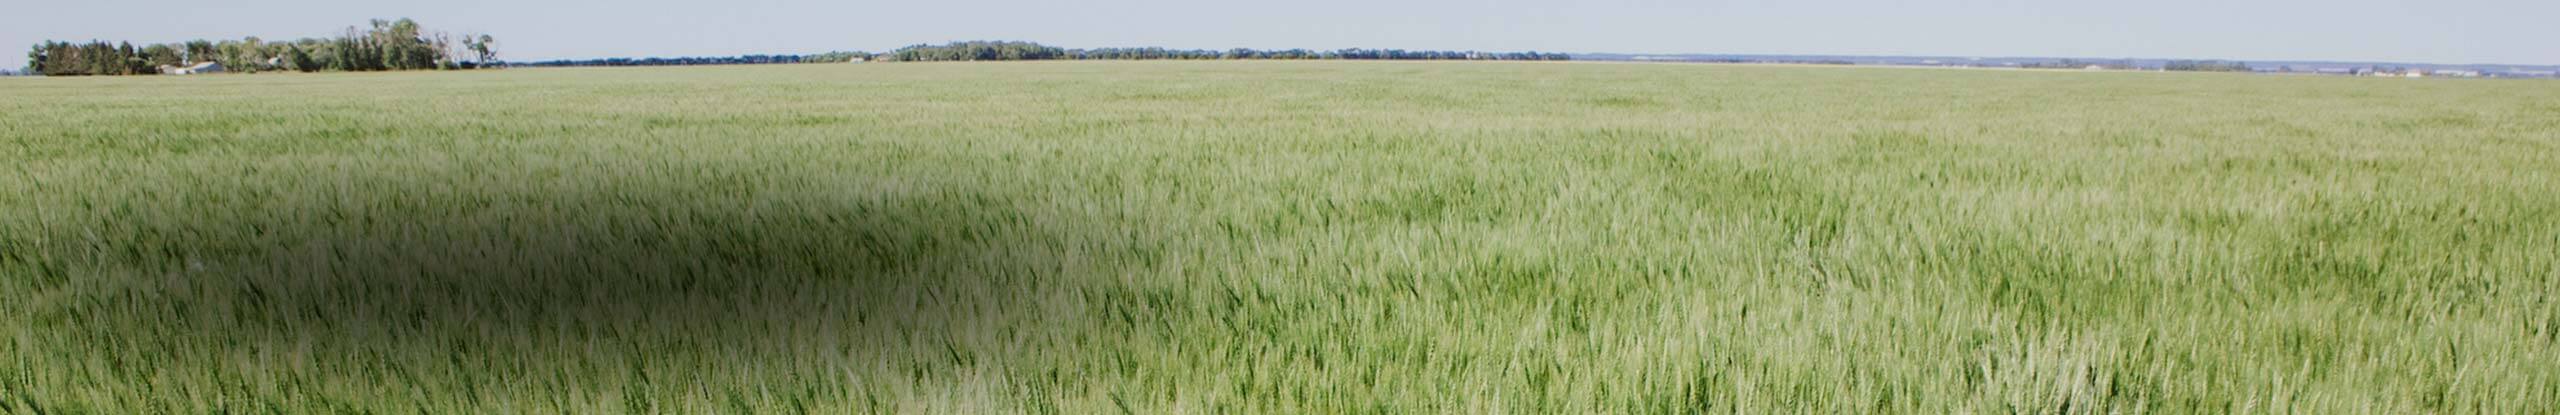 Optimizing crop rotations to enhance agronomic, economic and environmental performance